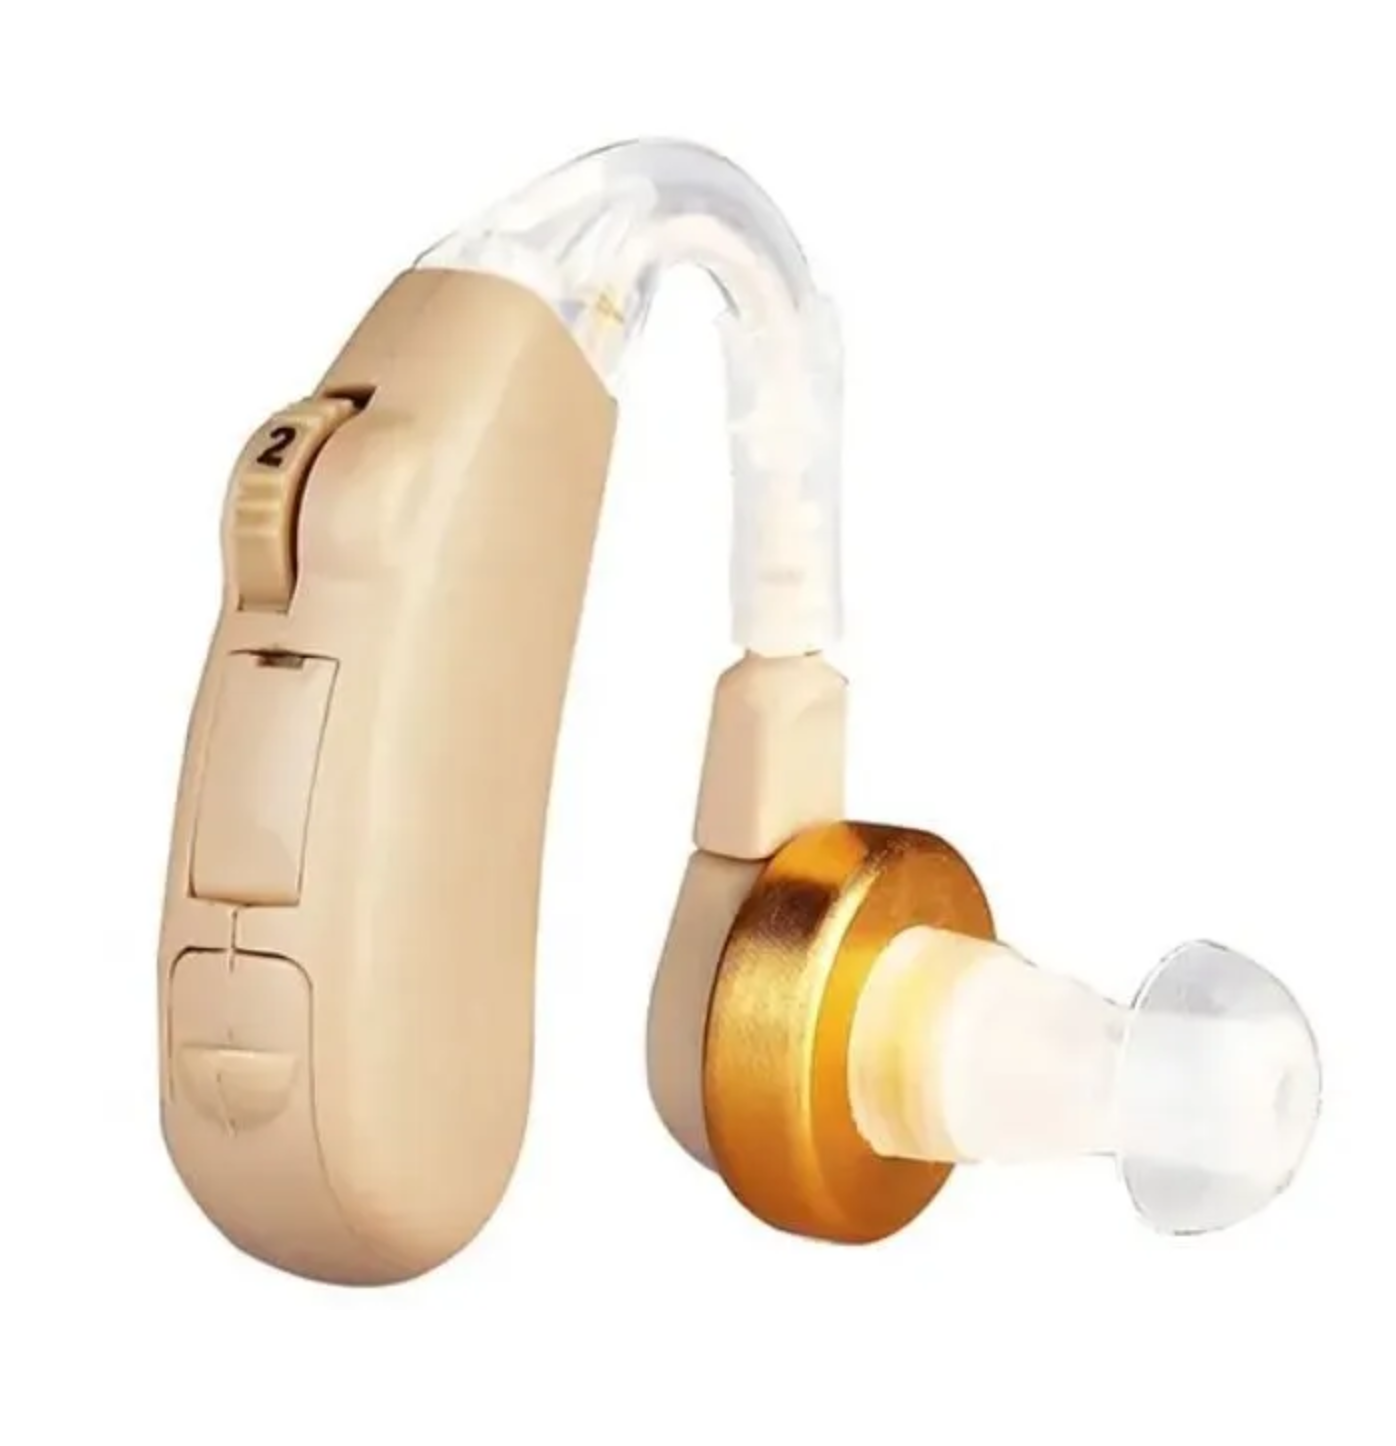 Купить Слуховой аппарат заушный KUPLACE Hearing Aid 189 на батарейках, бежевый